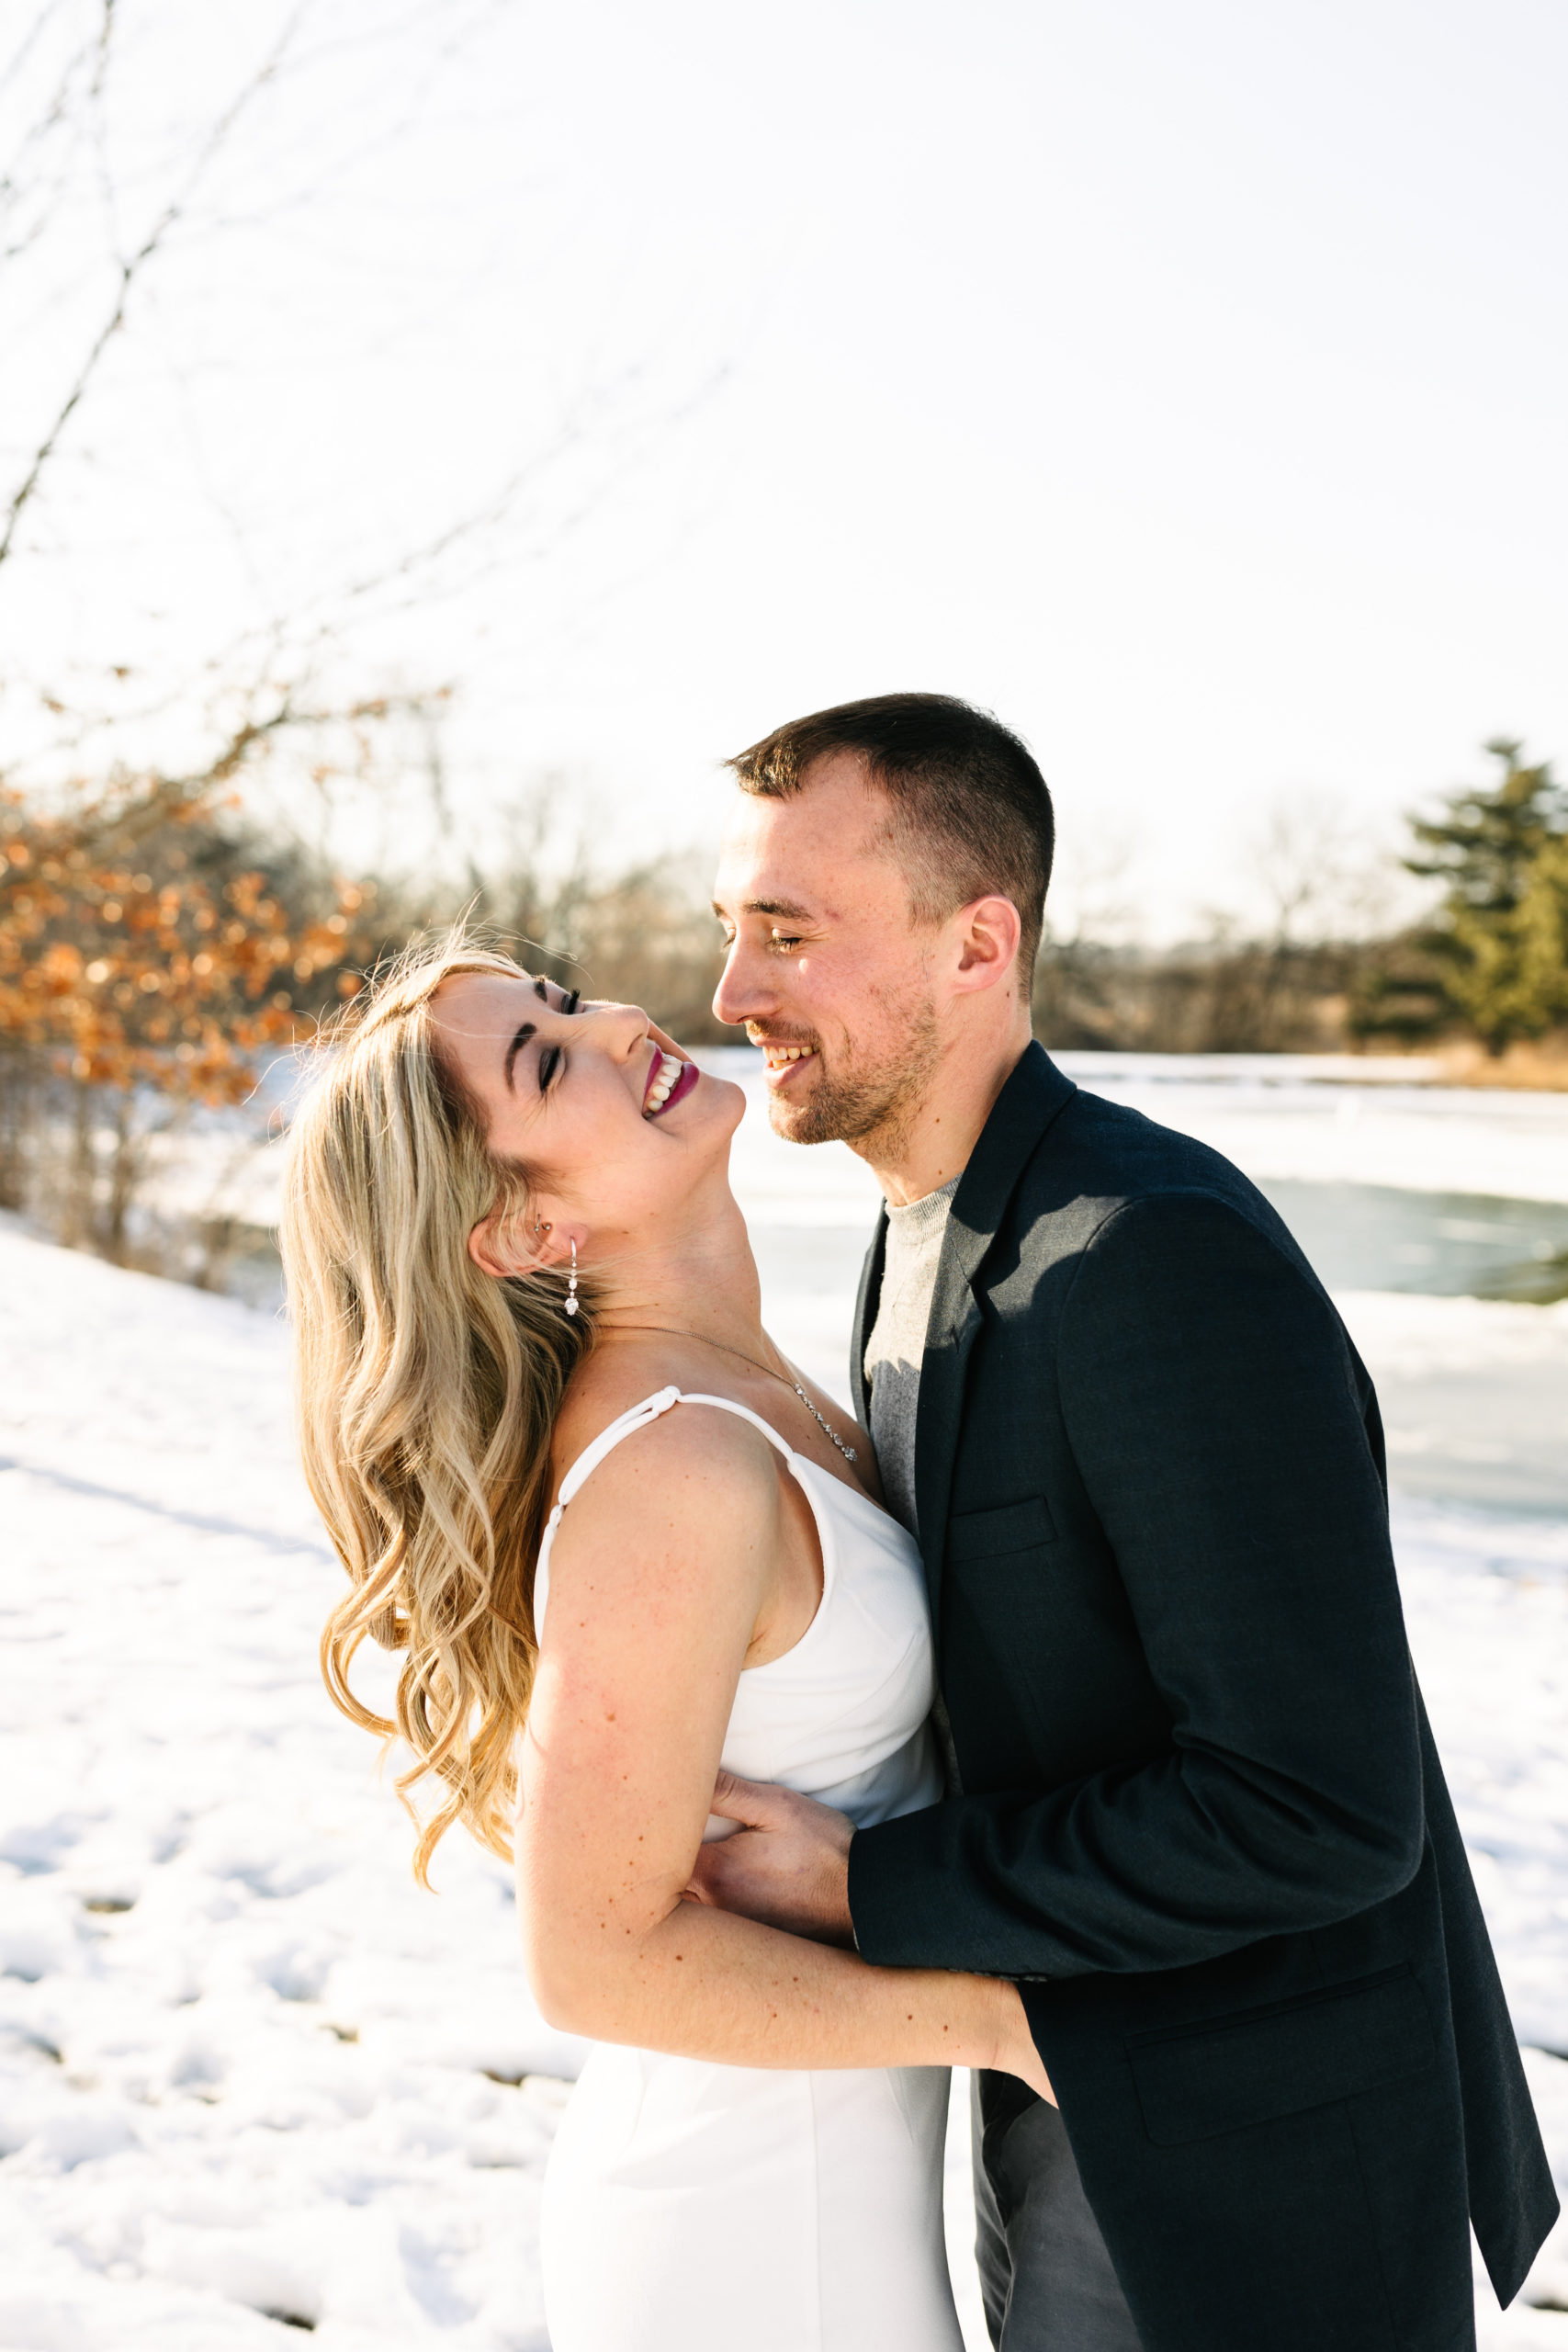 Snowy Wedding Photos, Shawnee Mission Park, Kansas City Photographer, Natalie Nichole Photos, chic elopement, wedding photos, snow day, winter wedding